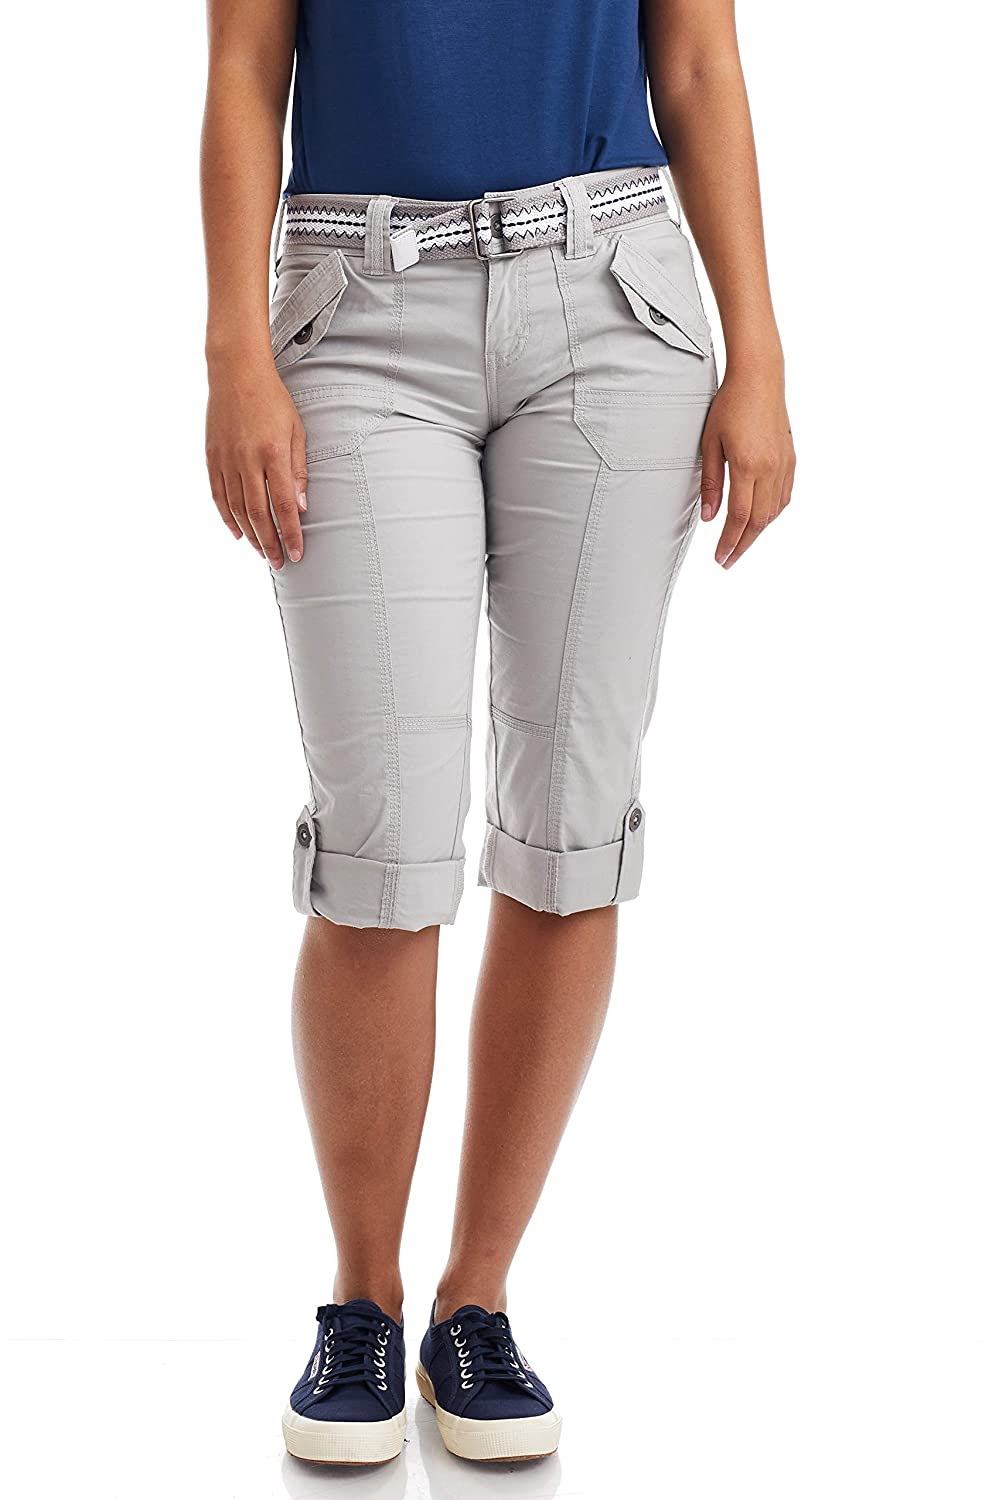 Size 2 to 22 Plus Suko Jeans Womens Cargo Capri Bermuda Shorts Adjustable Length Stretchy Pants